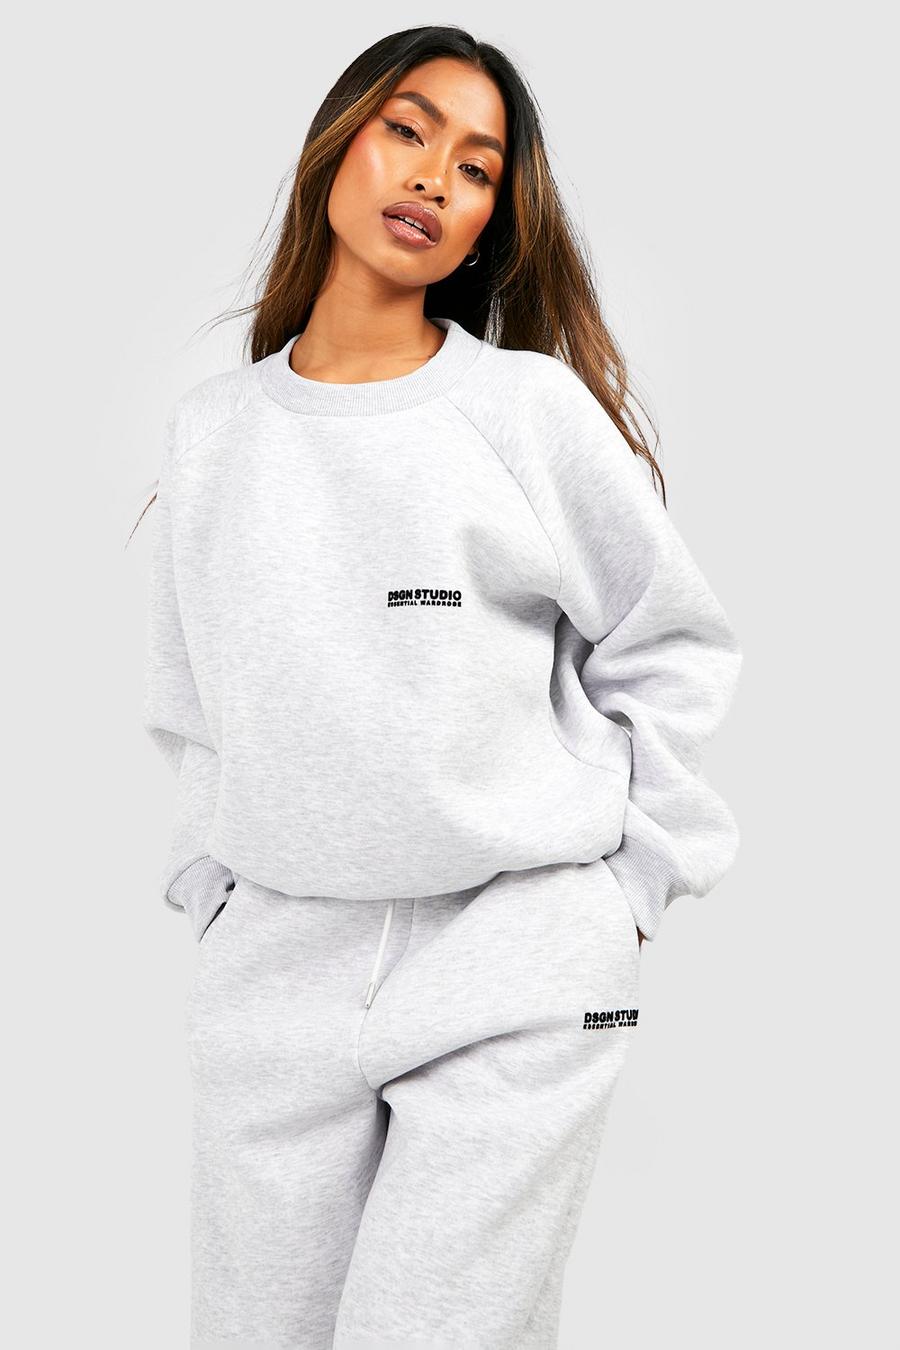 Ash grey Dsgn Studio Flocked Slogan Premium Oversized Sweater 